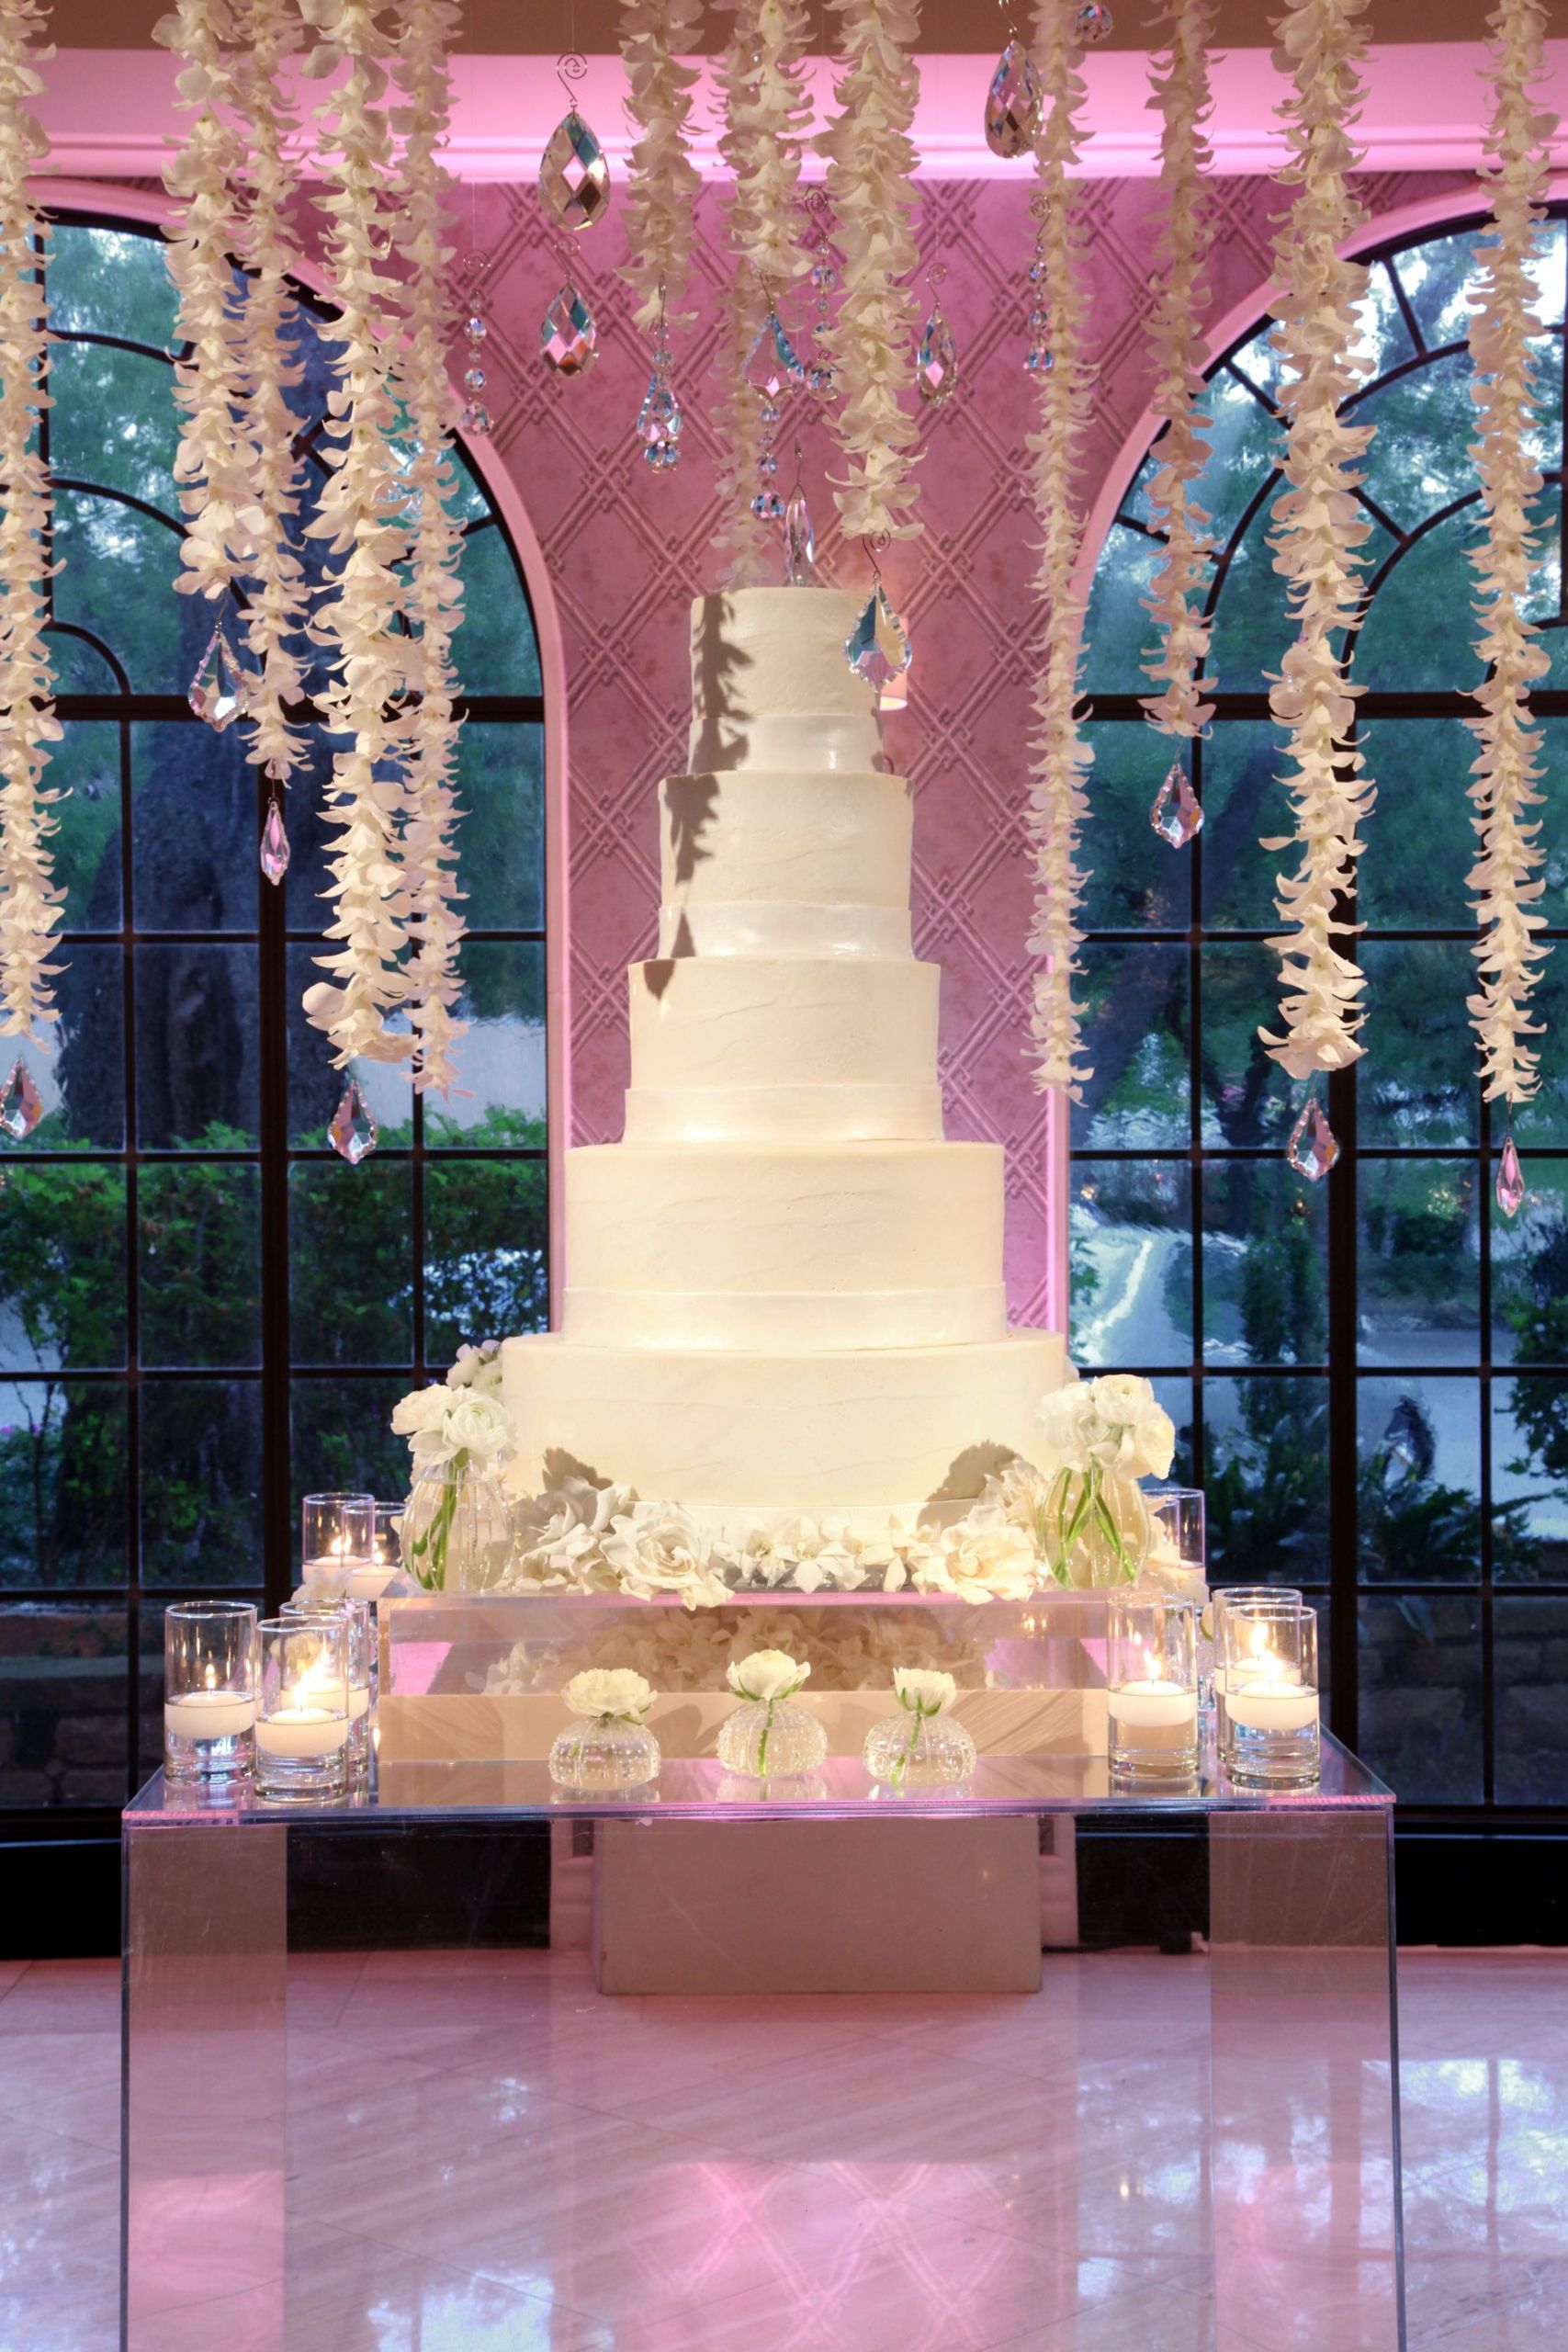 Extravagant Wedding Cakes
 Over the TOP Wedding Cakes on Pinterest